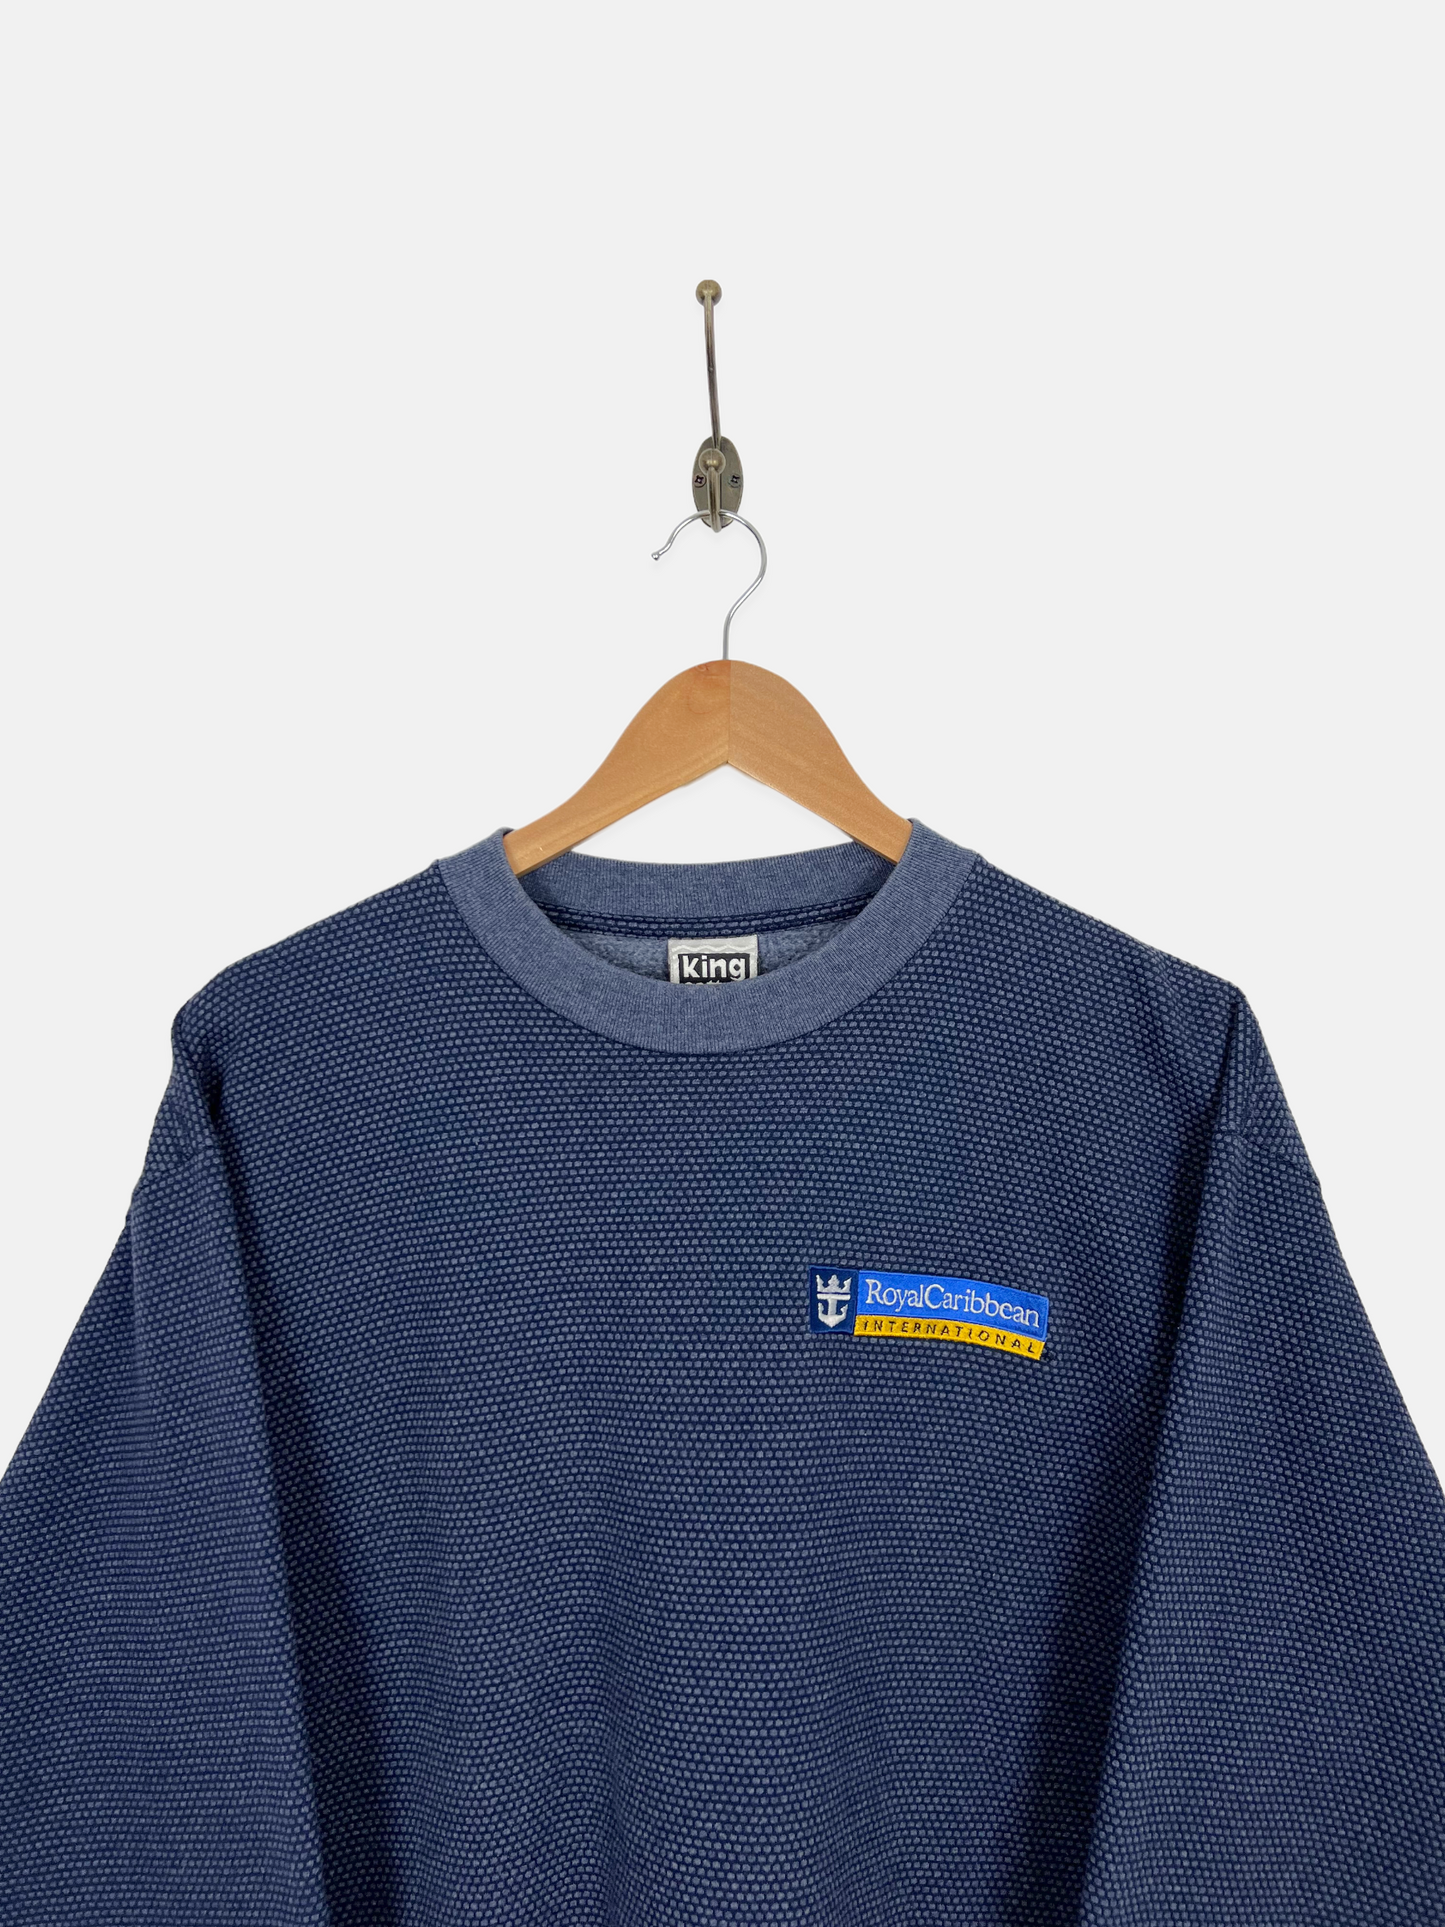 90's Royal Caribbean USA Made Embroidered Vintage Sweatshirt Size 8